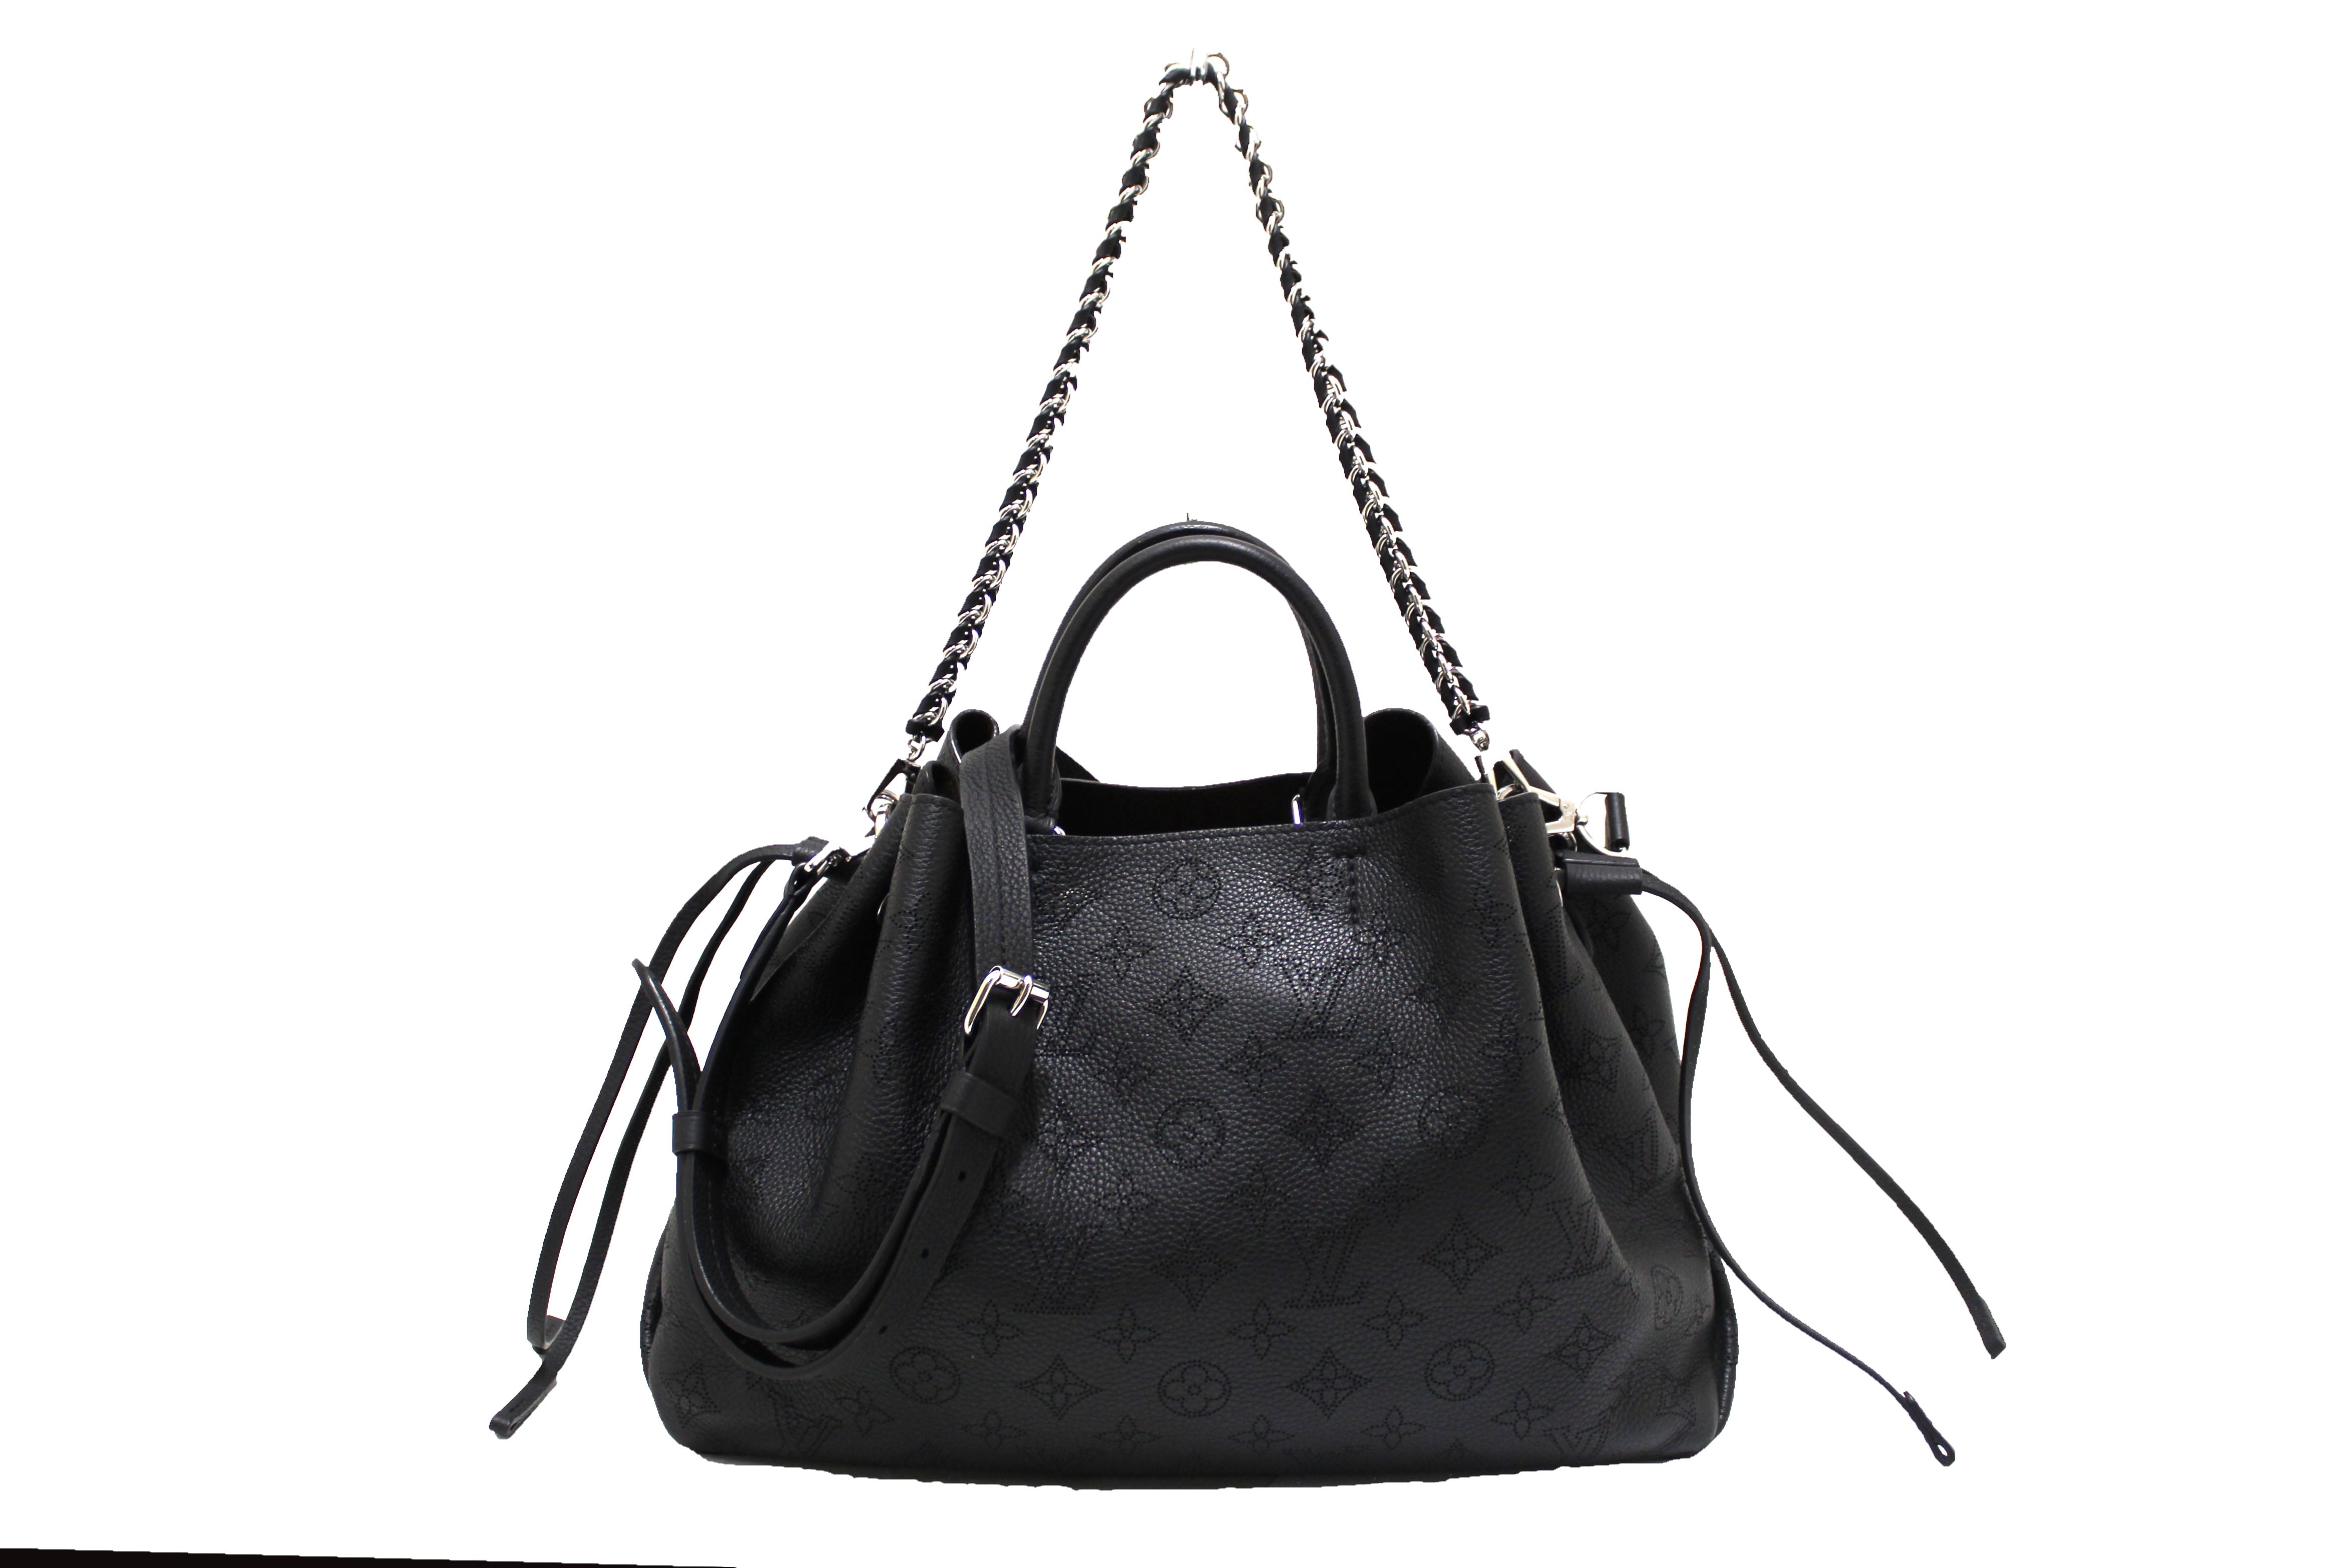 Louis Vuitton Babylone Mahina Calfskin Leather Satchel Bag